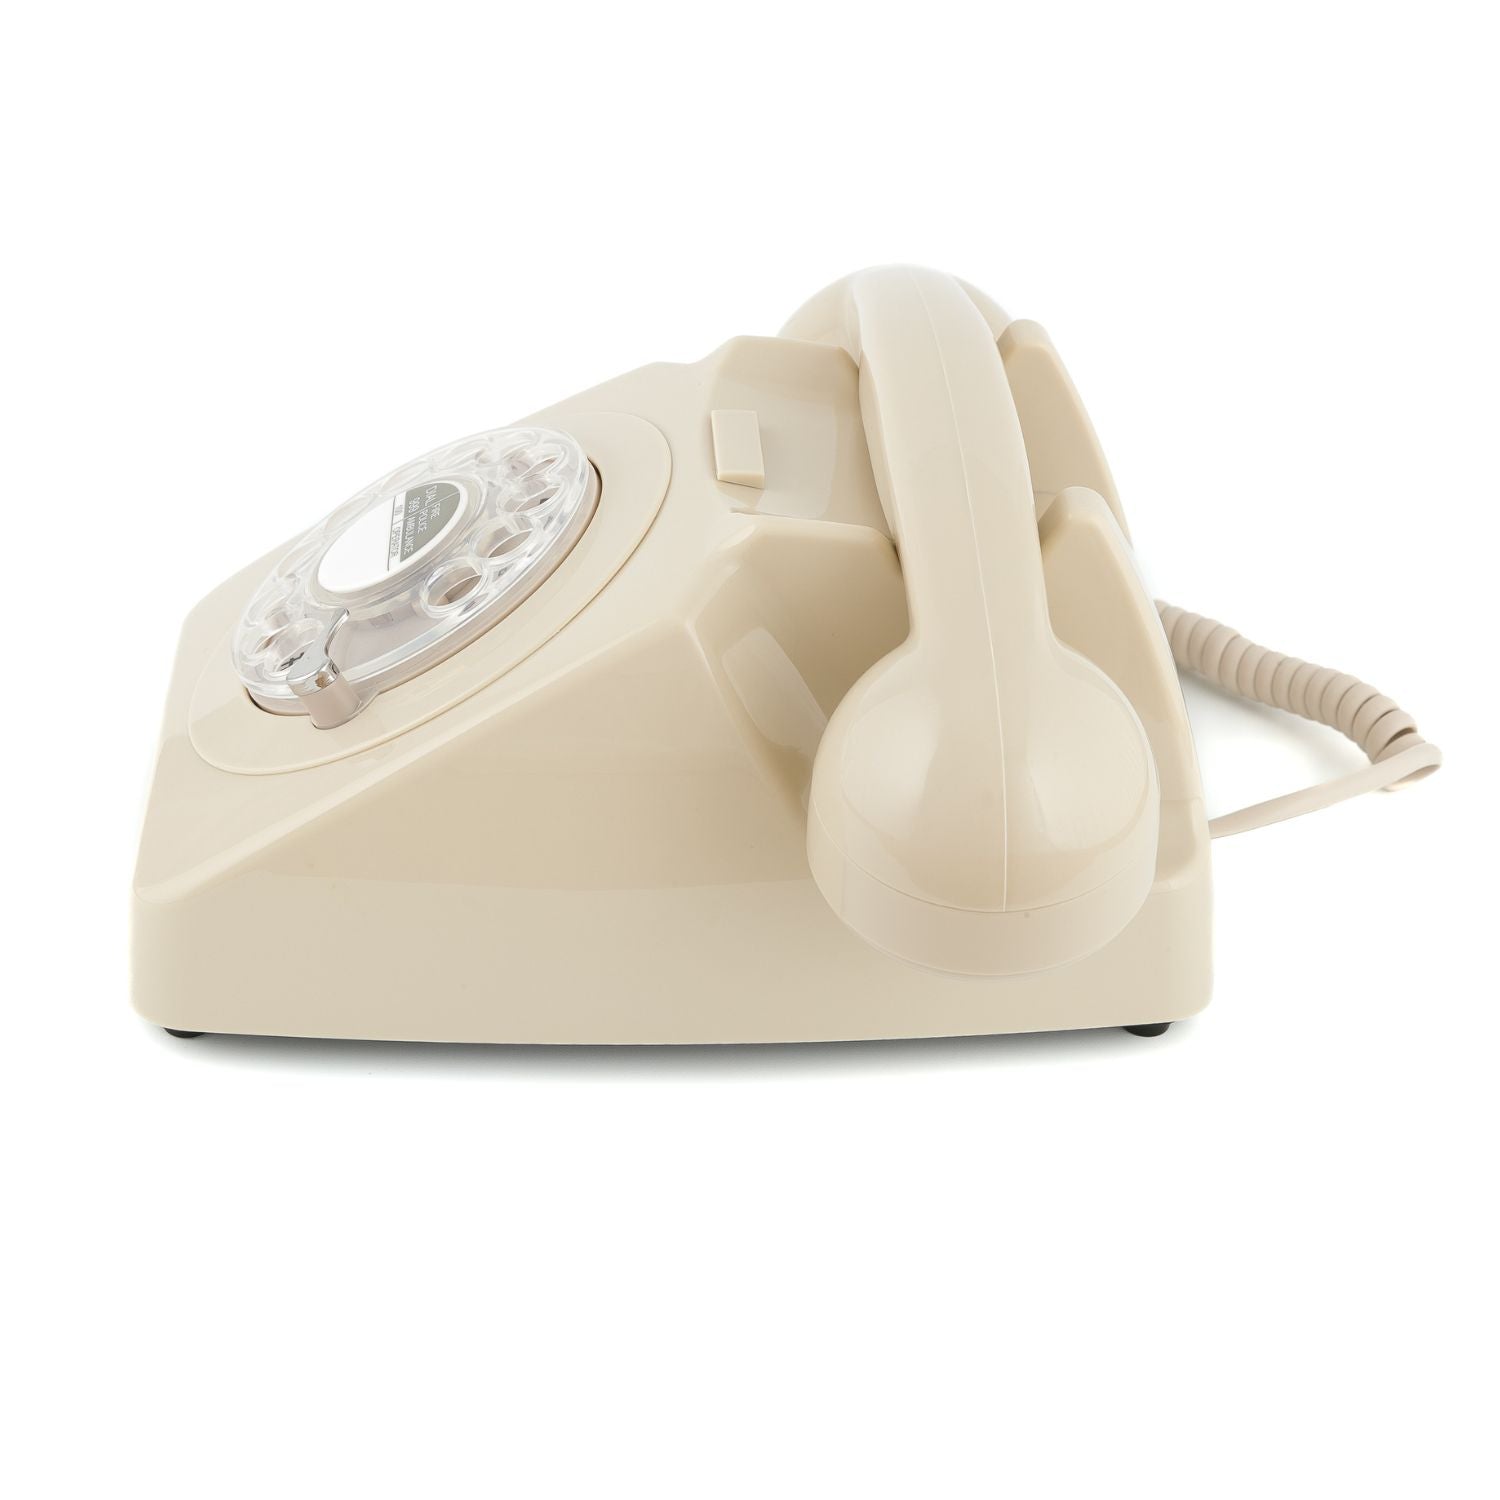 GPO Retro 746 Rotary Telephone - Ivory